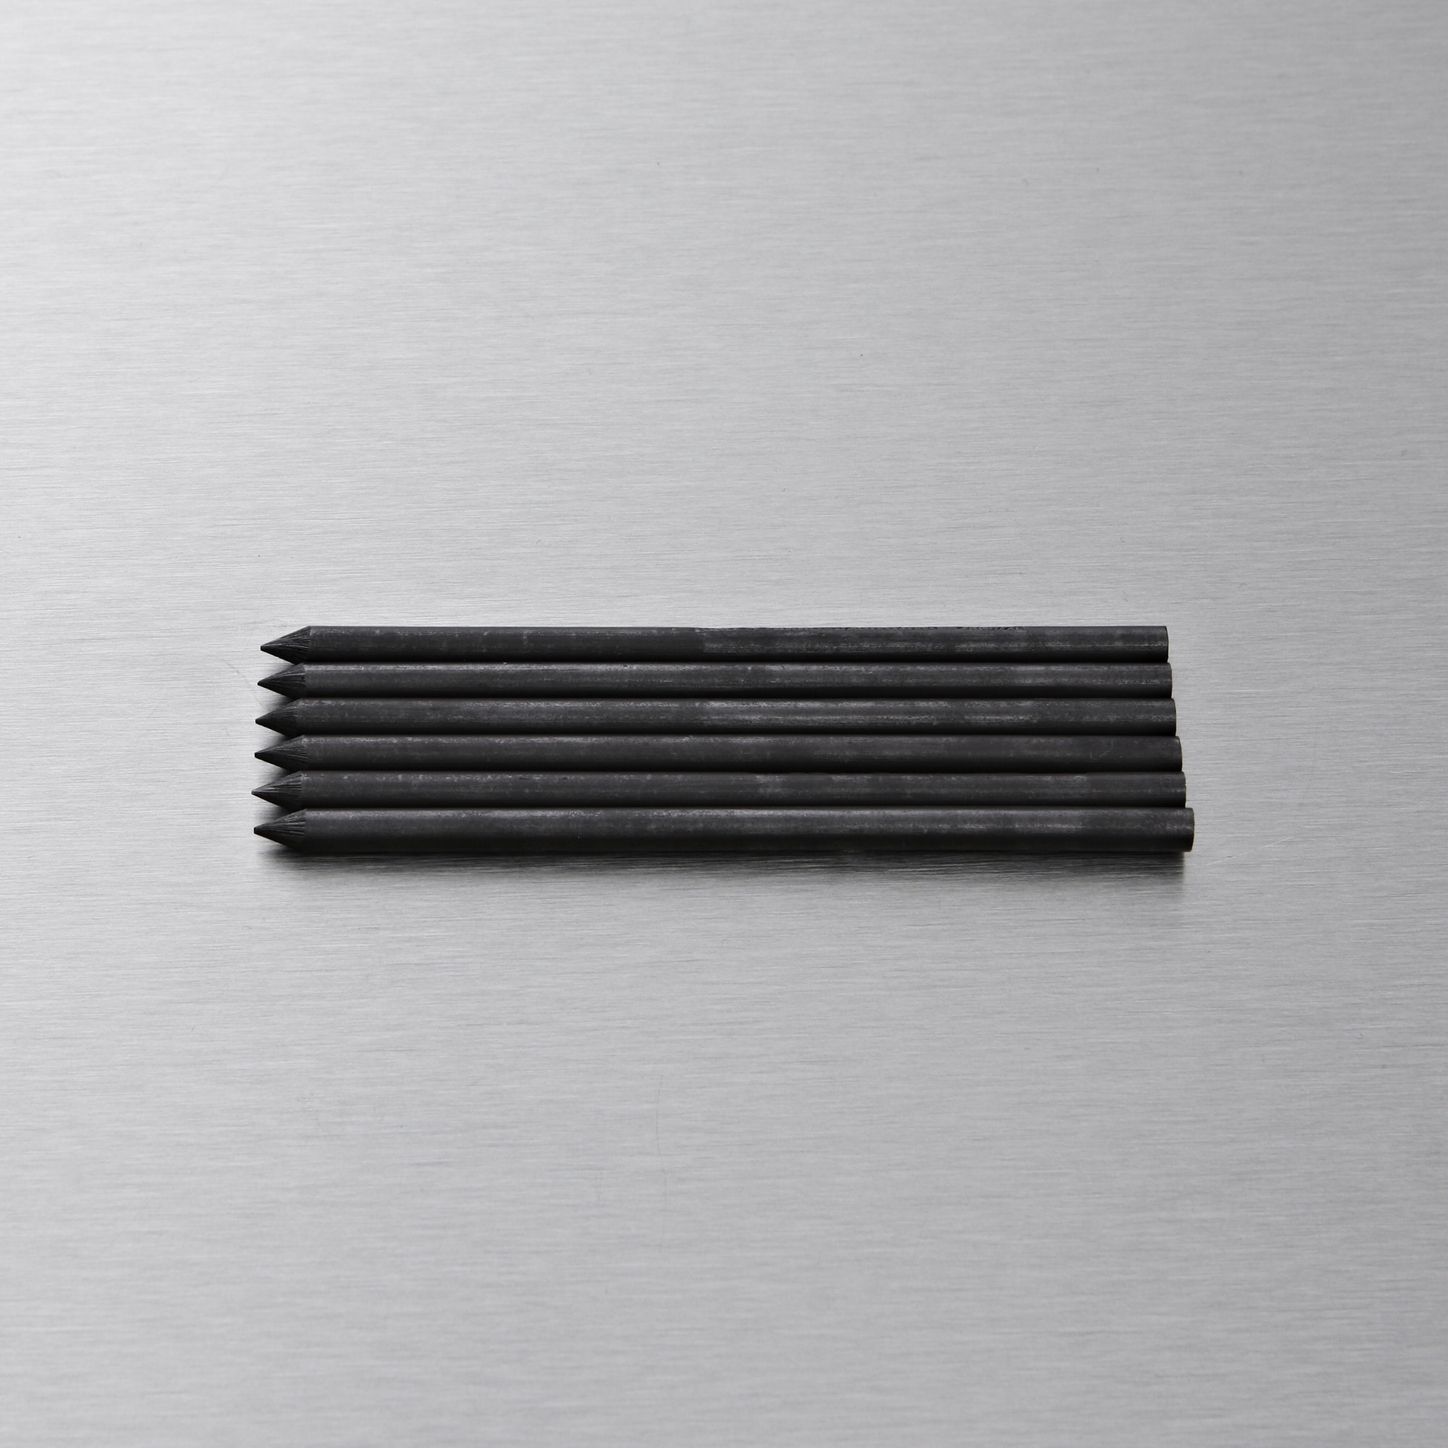 Best Pencils for Artists - 2019